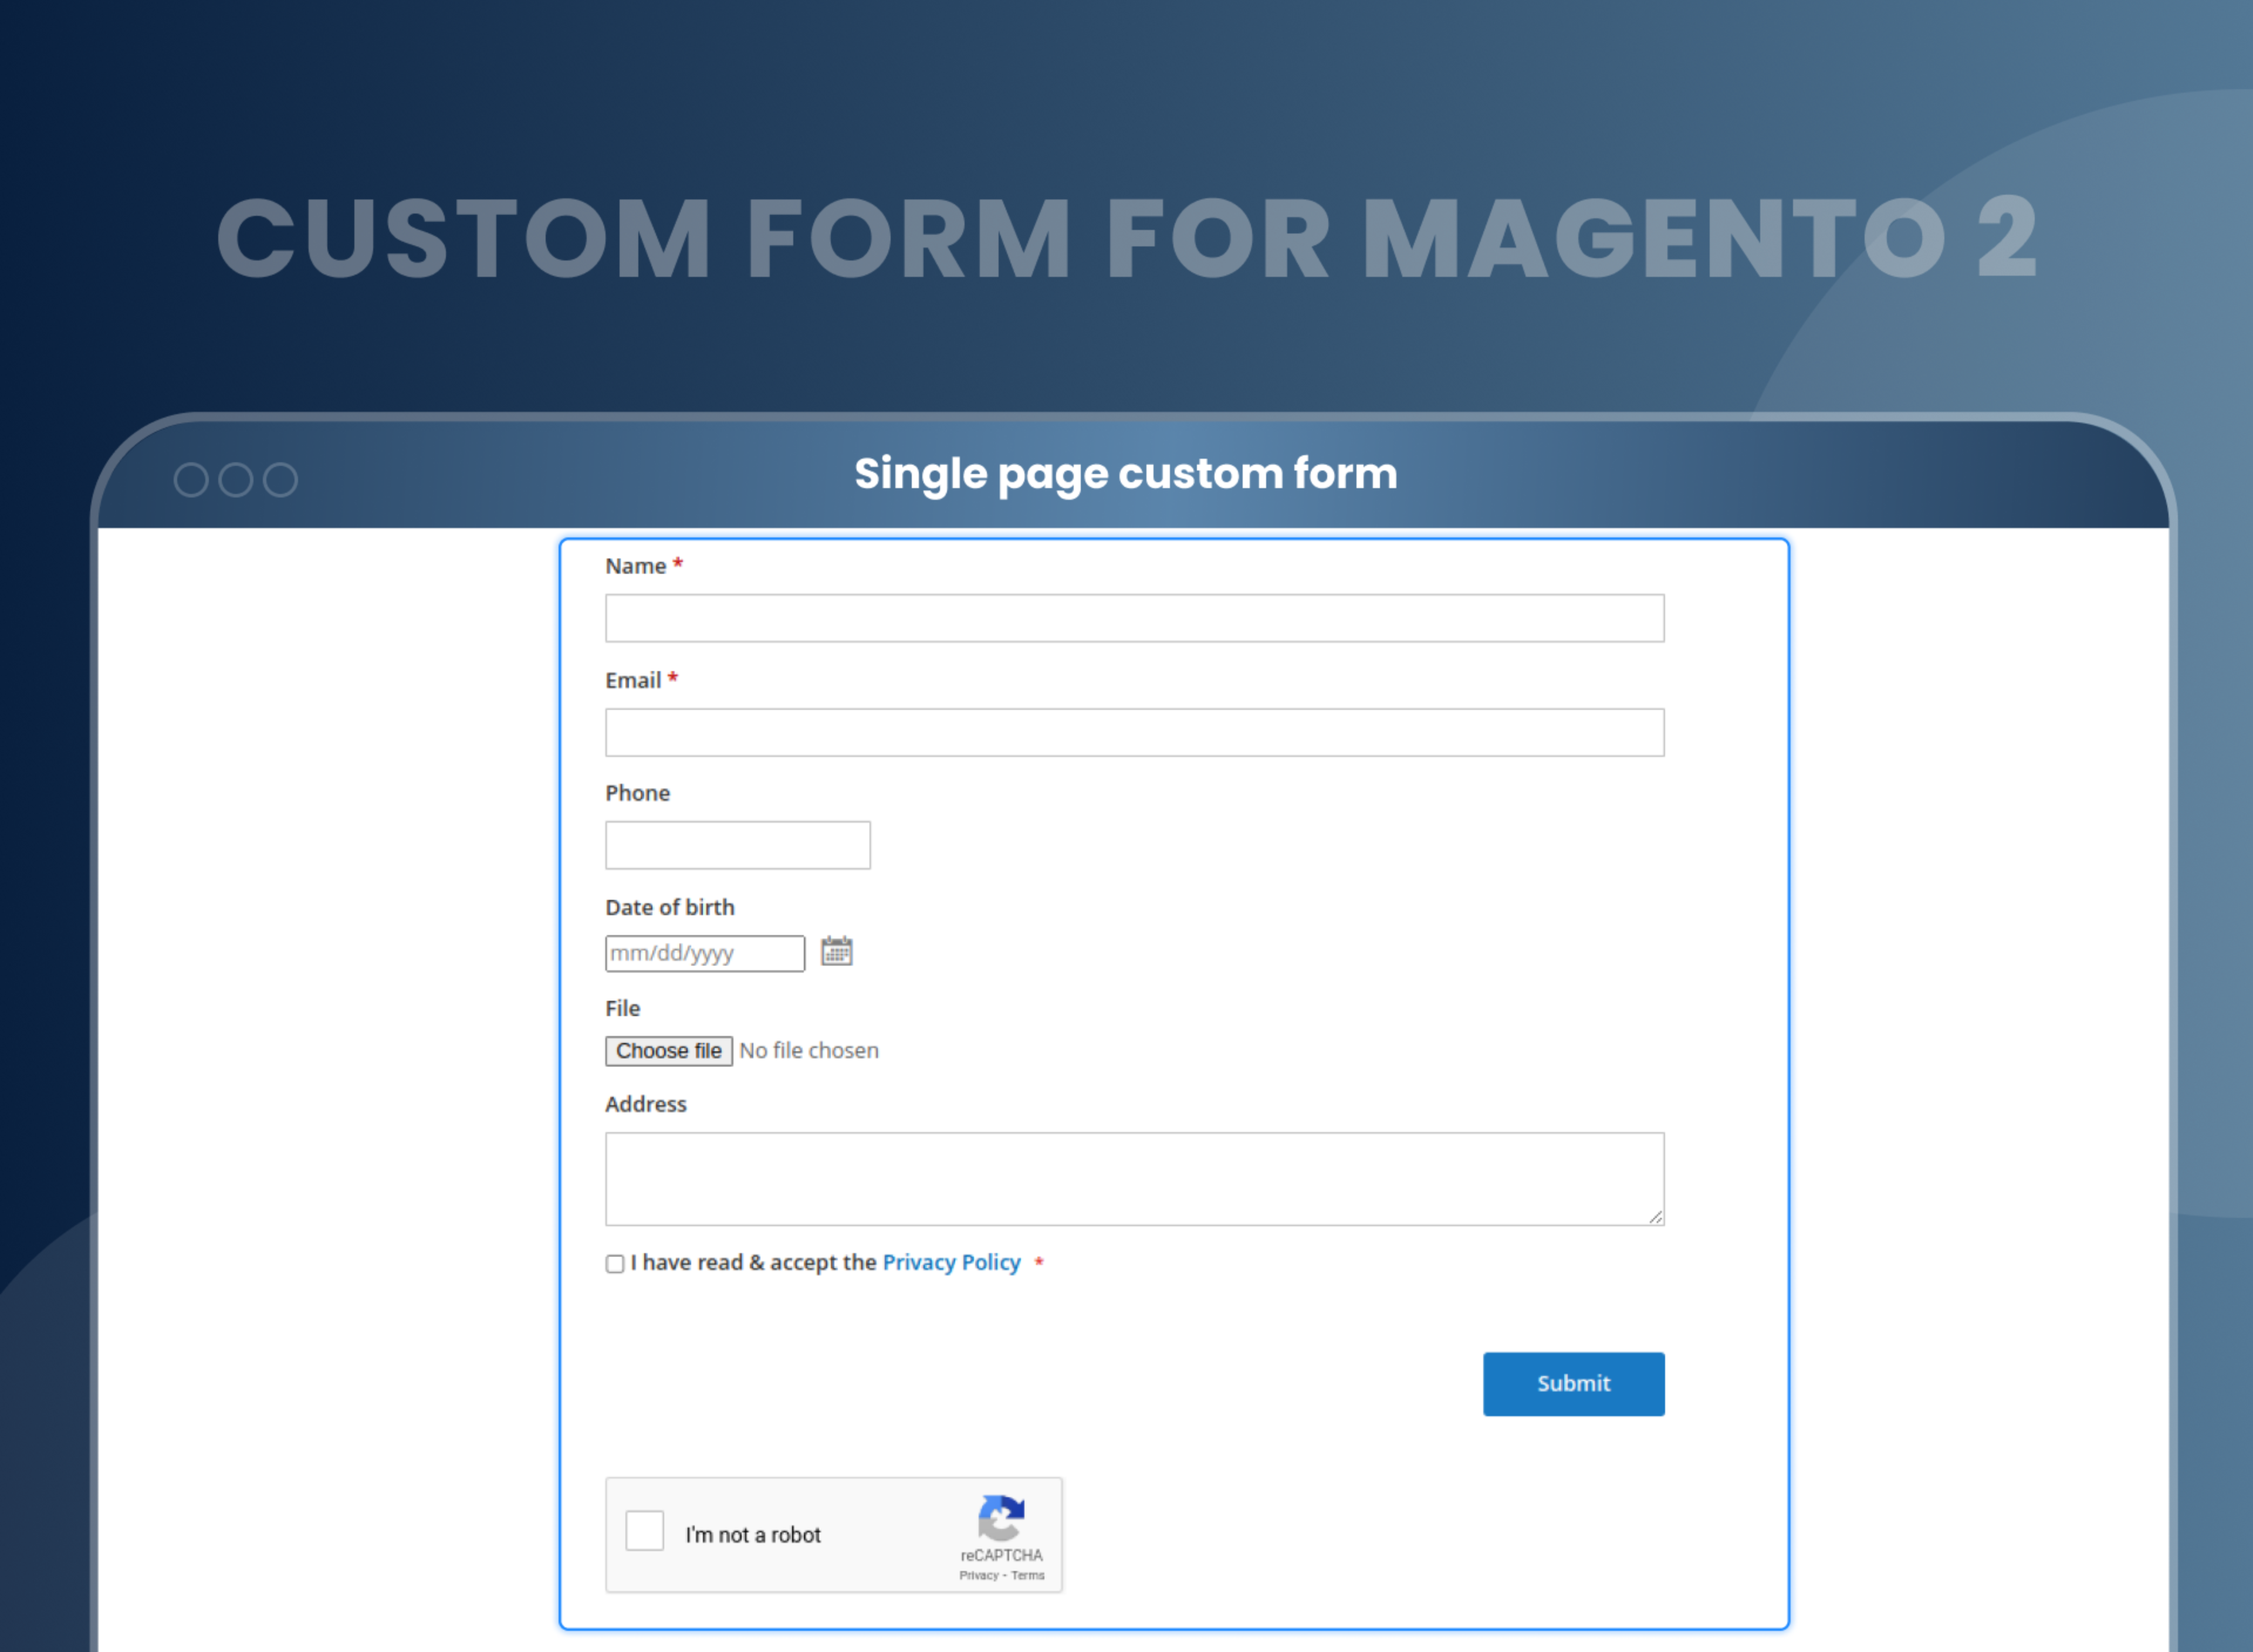 Single page custom form